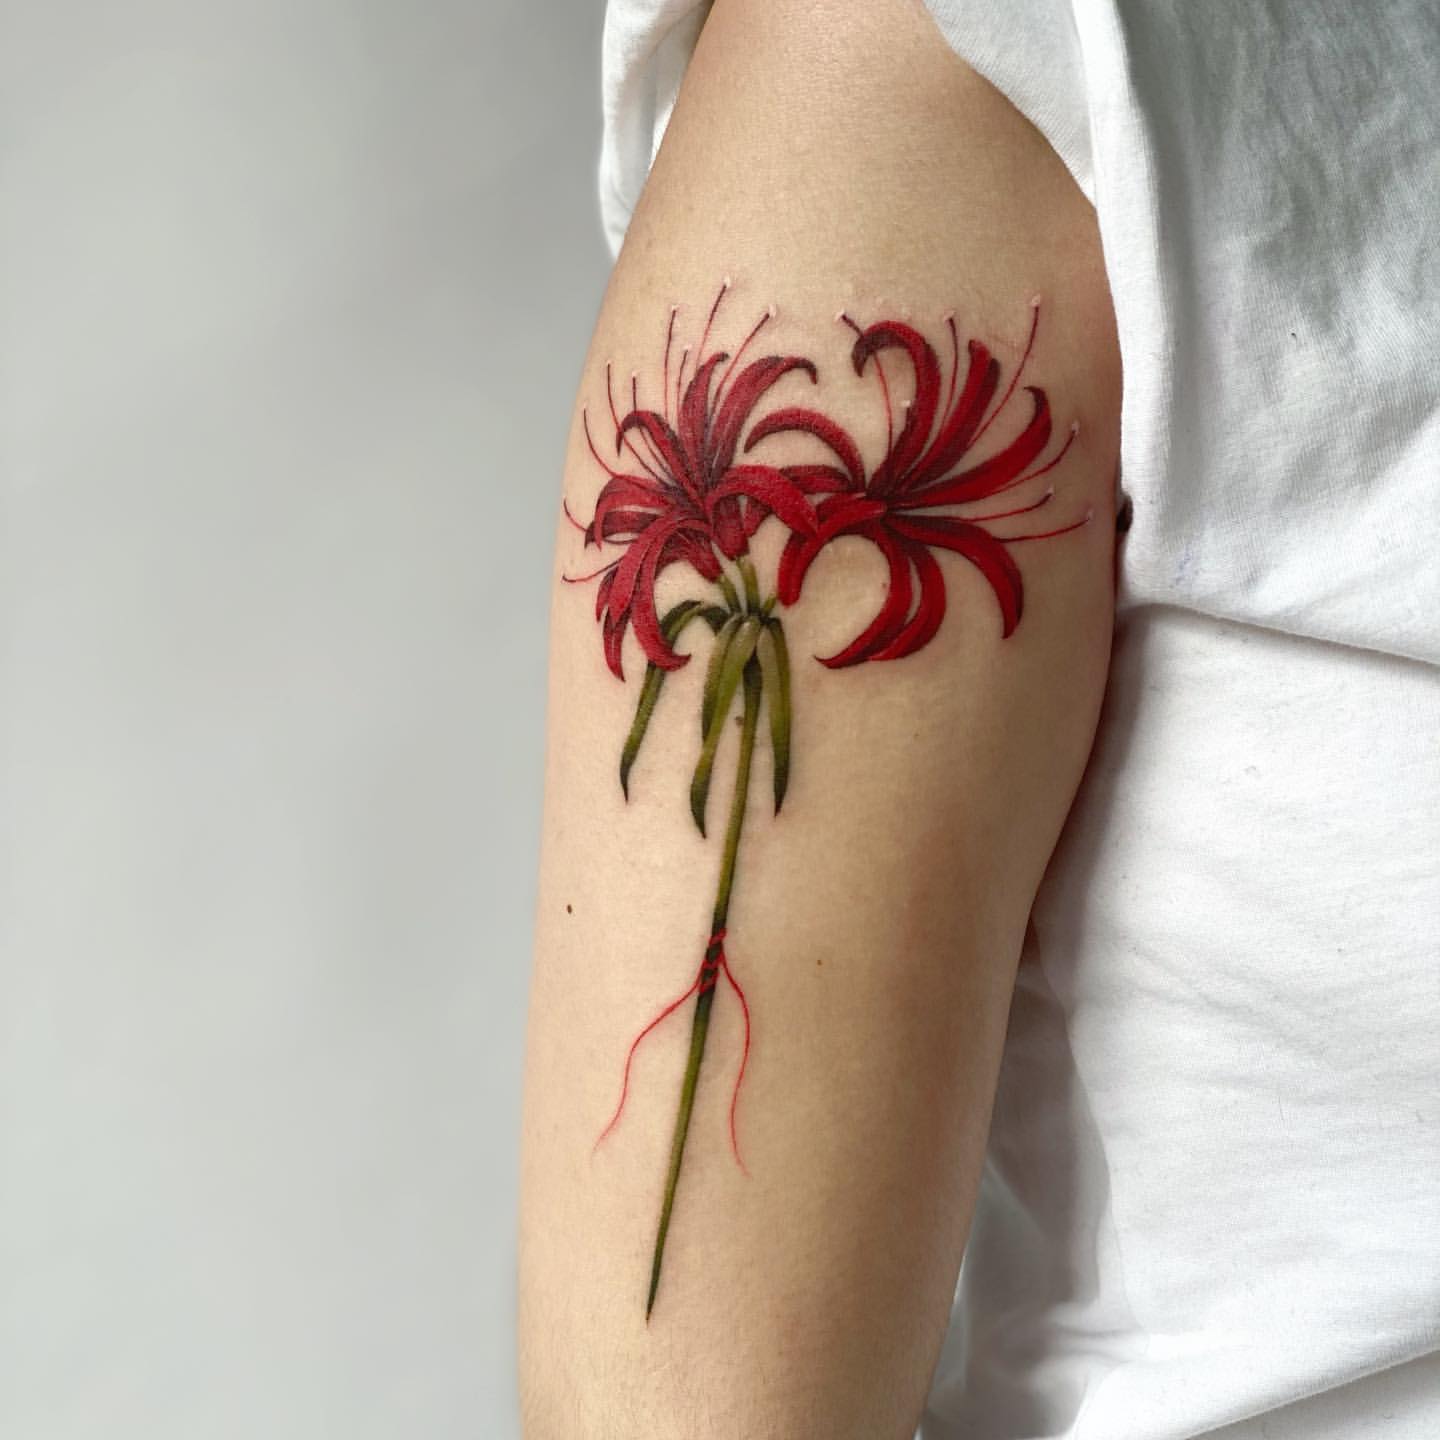 Spider Lily Tattoo Ideas 6